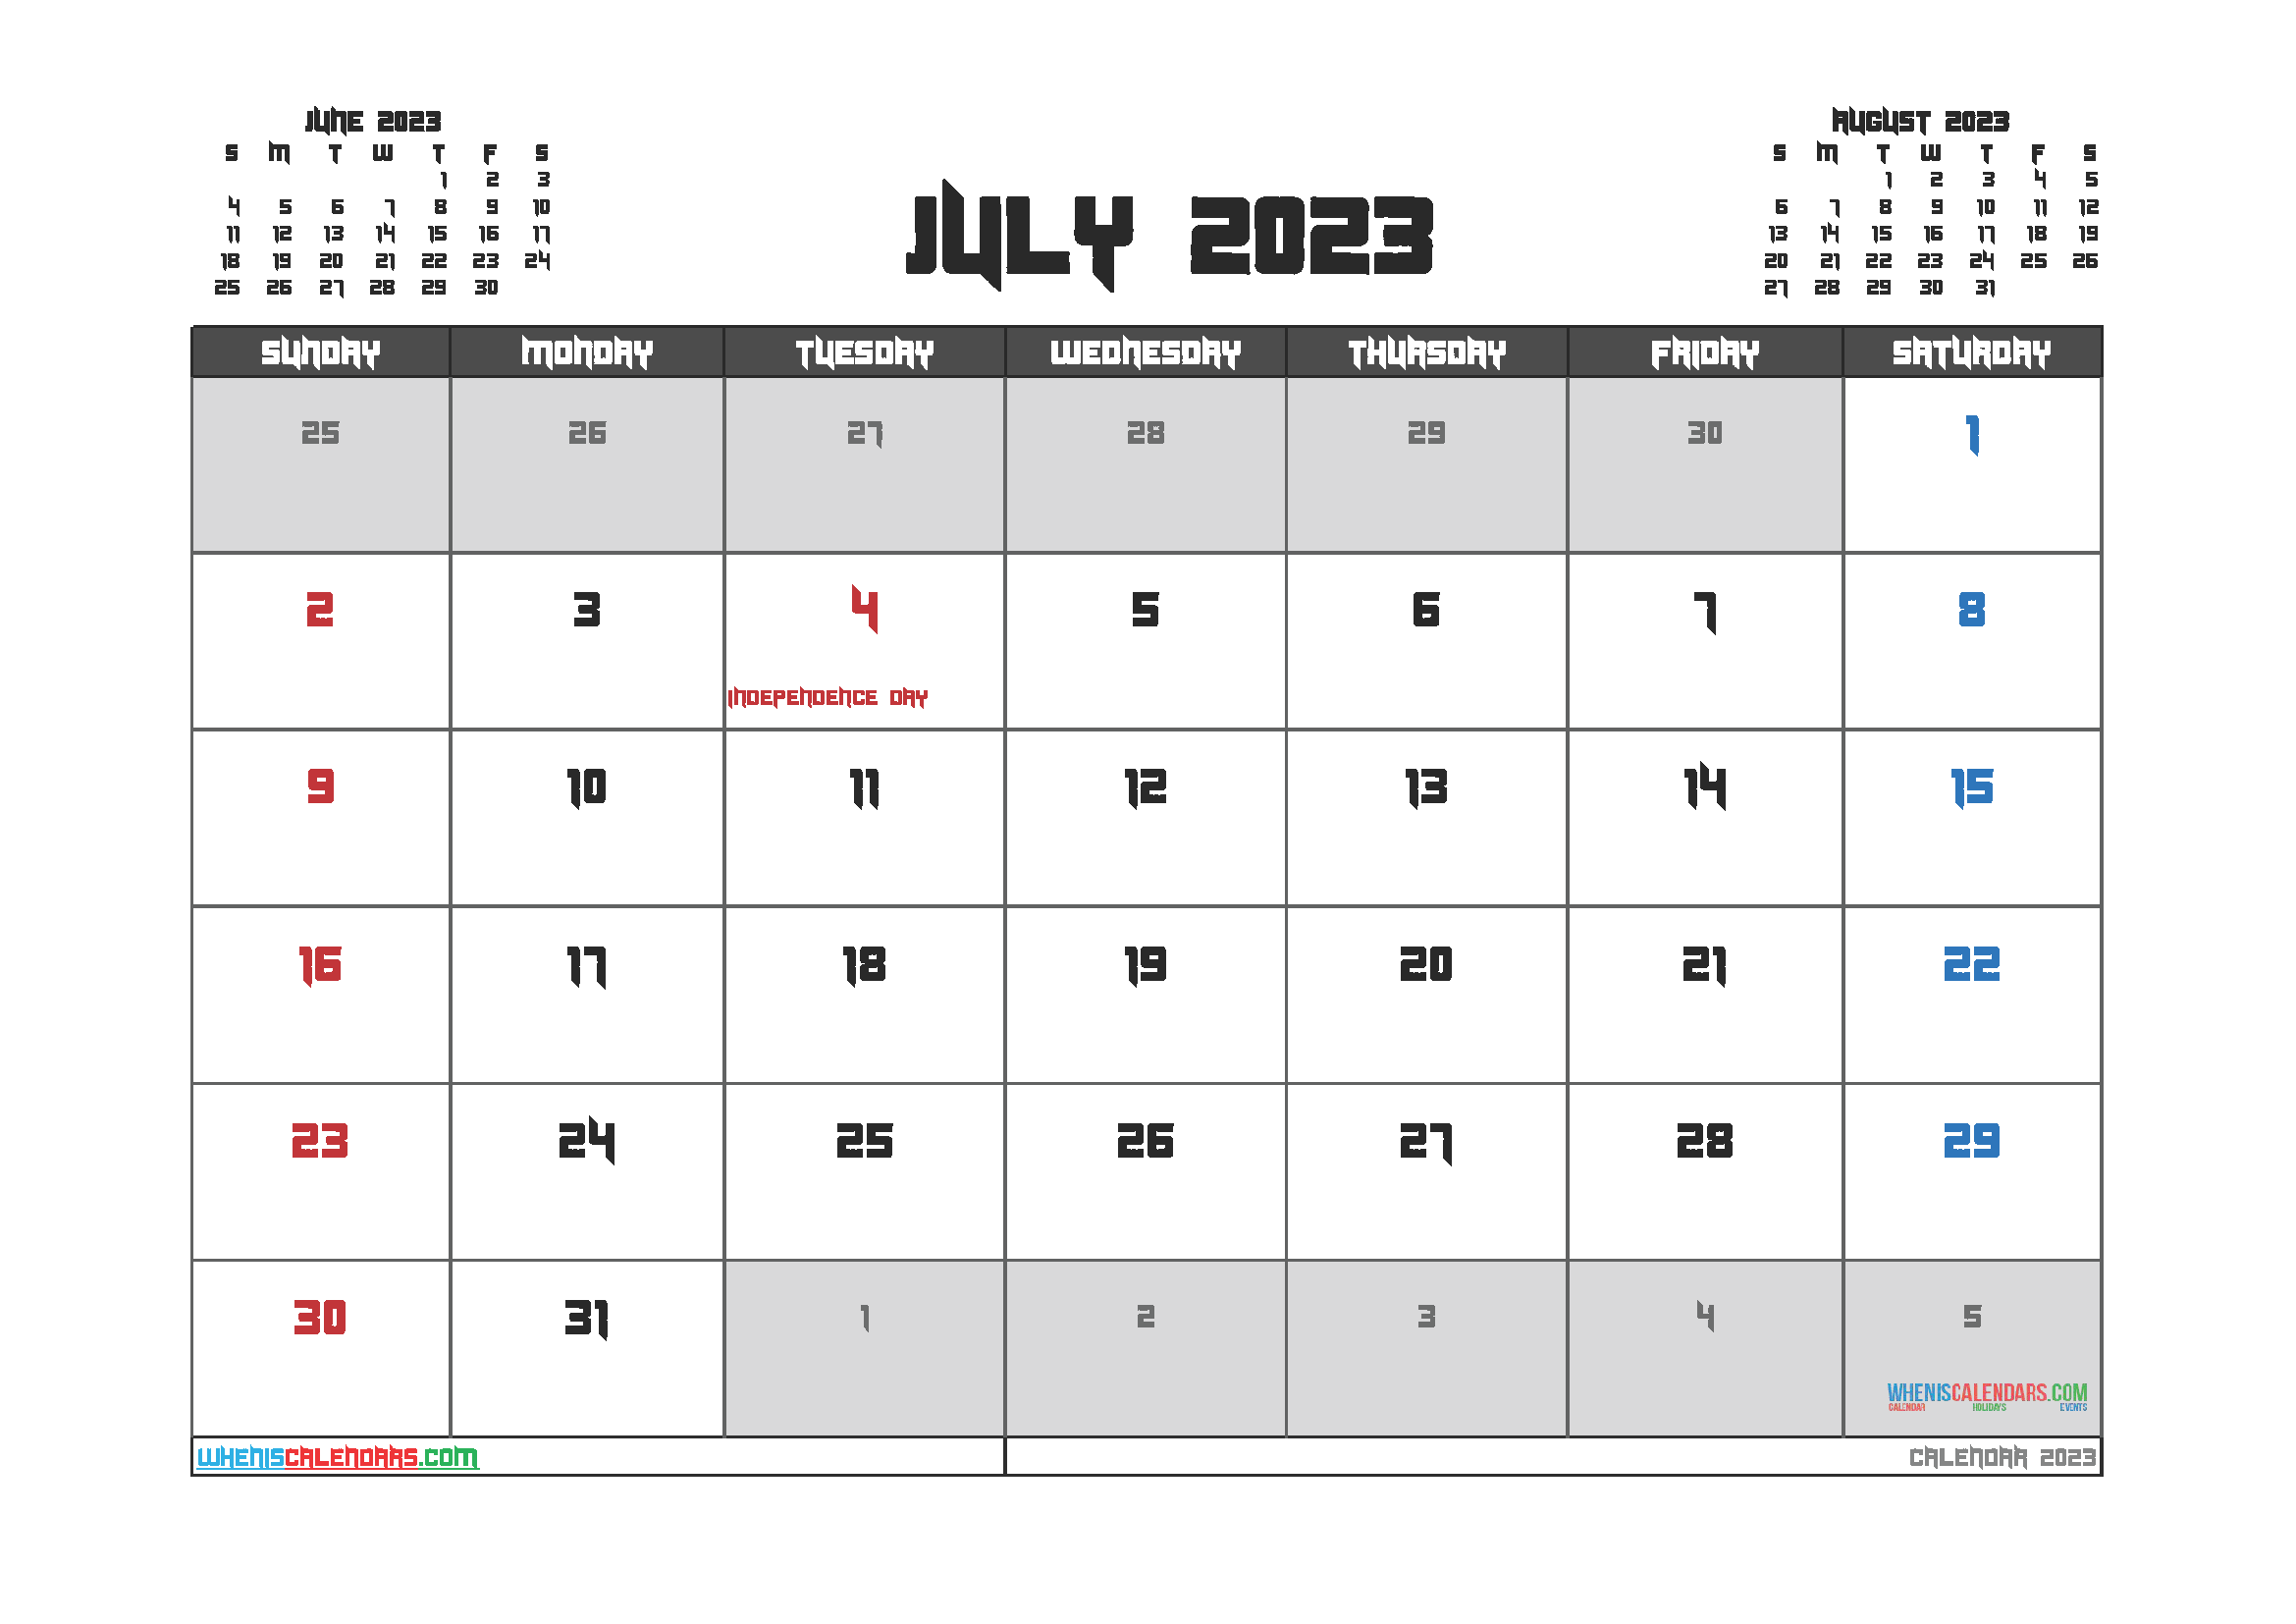 Free July 2023 Printable Calendar